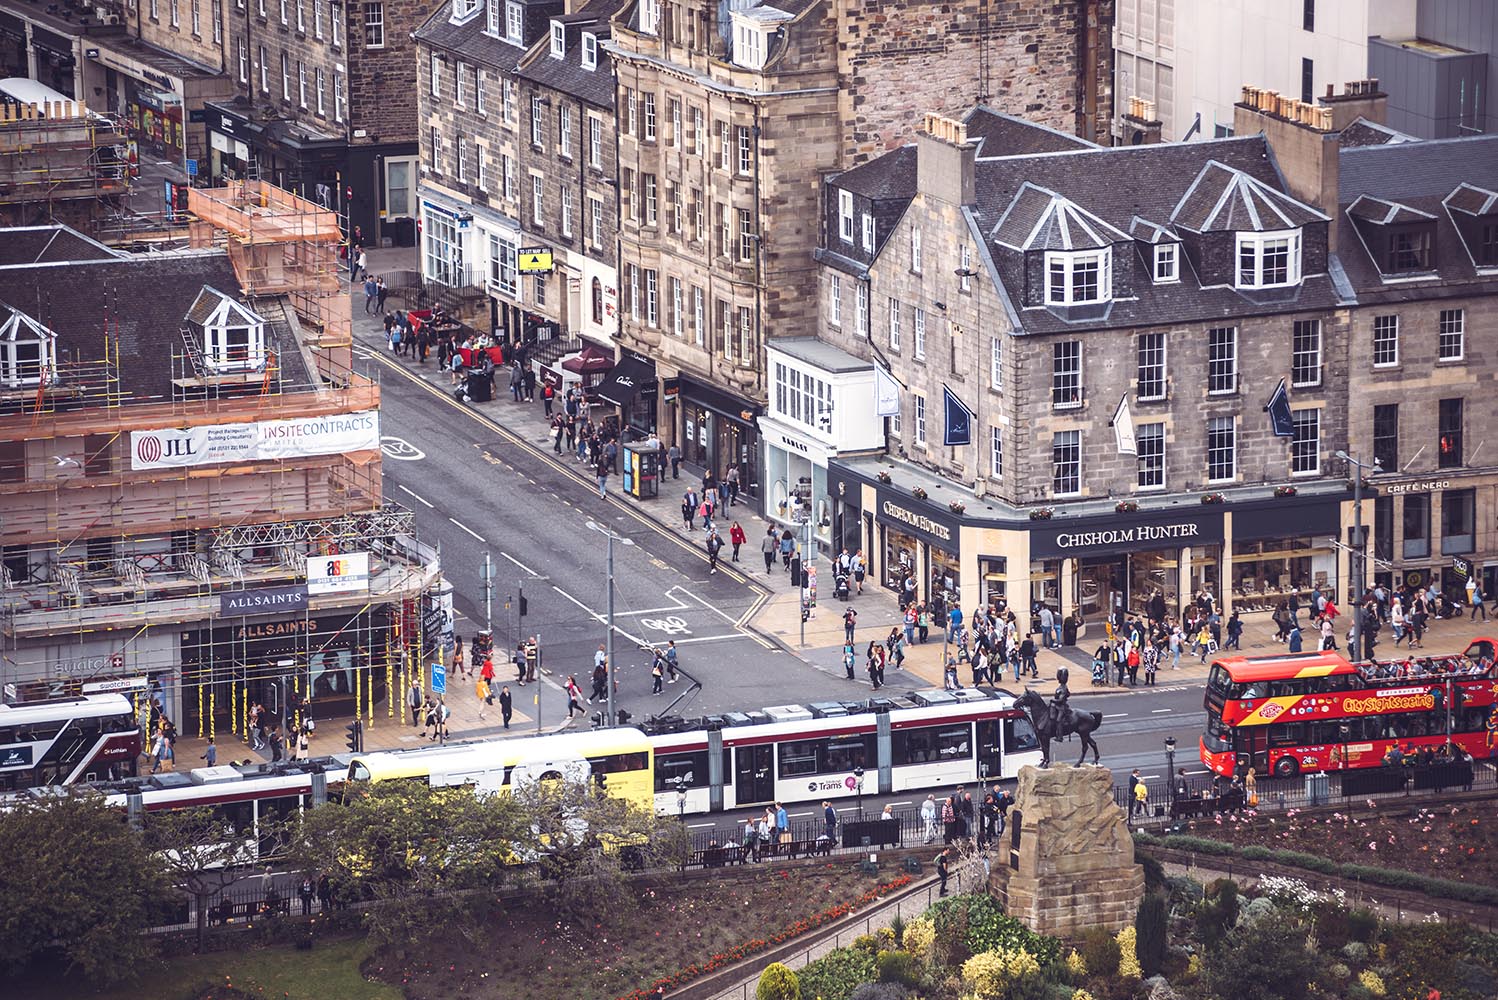 Picturesque view of Edinburgh, Scotland